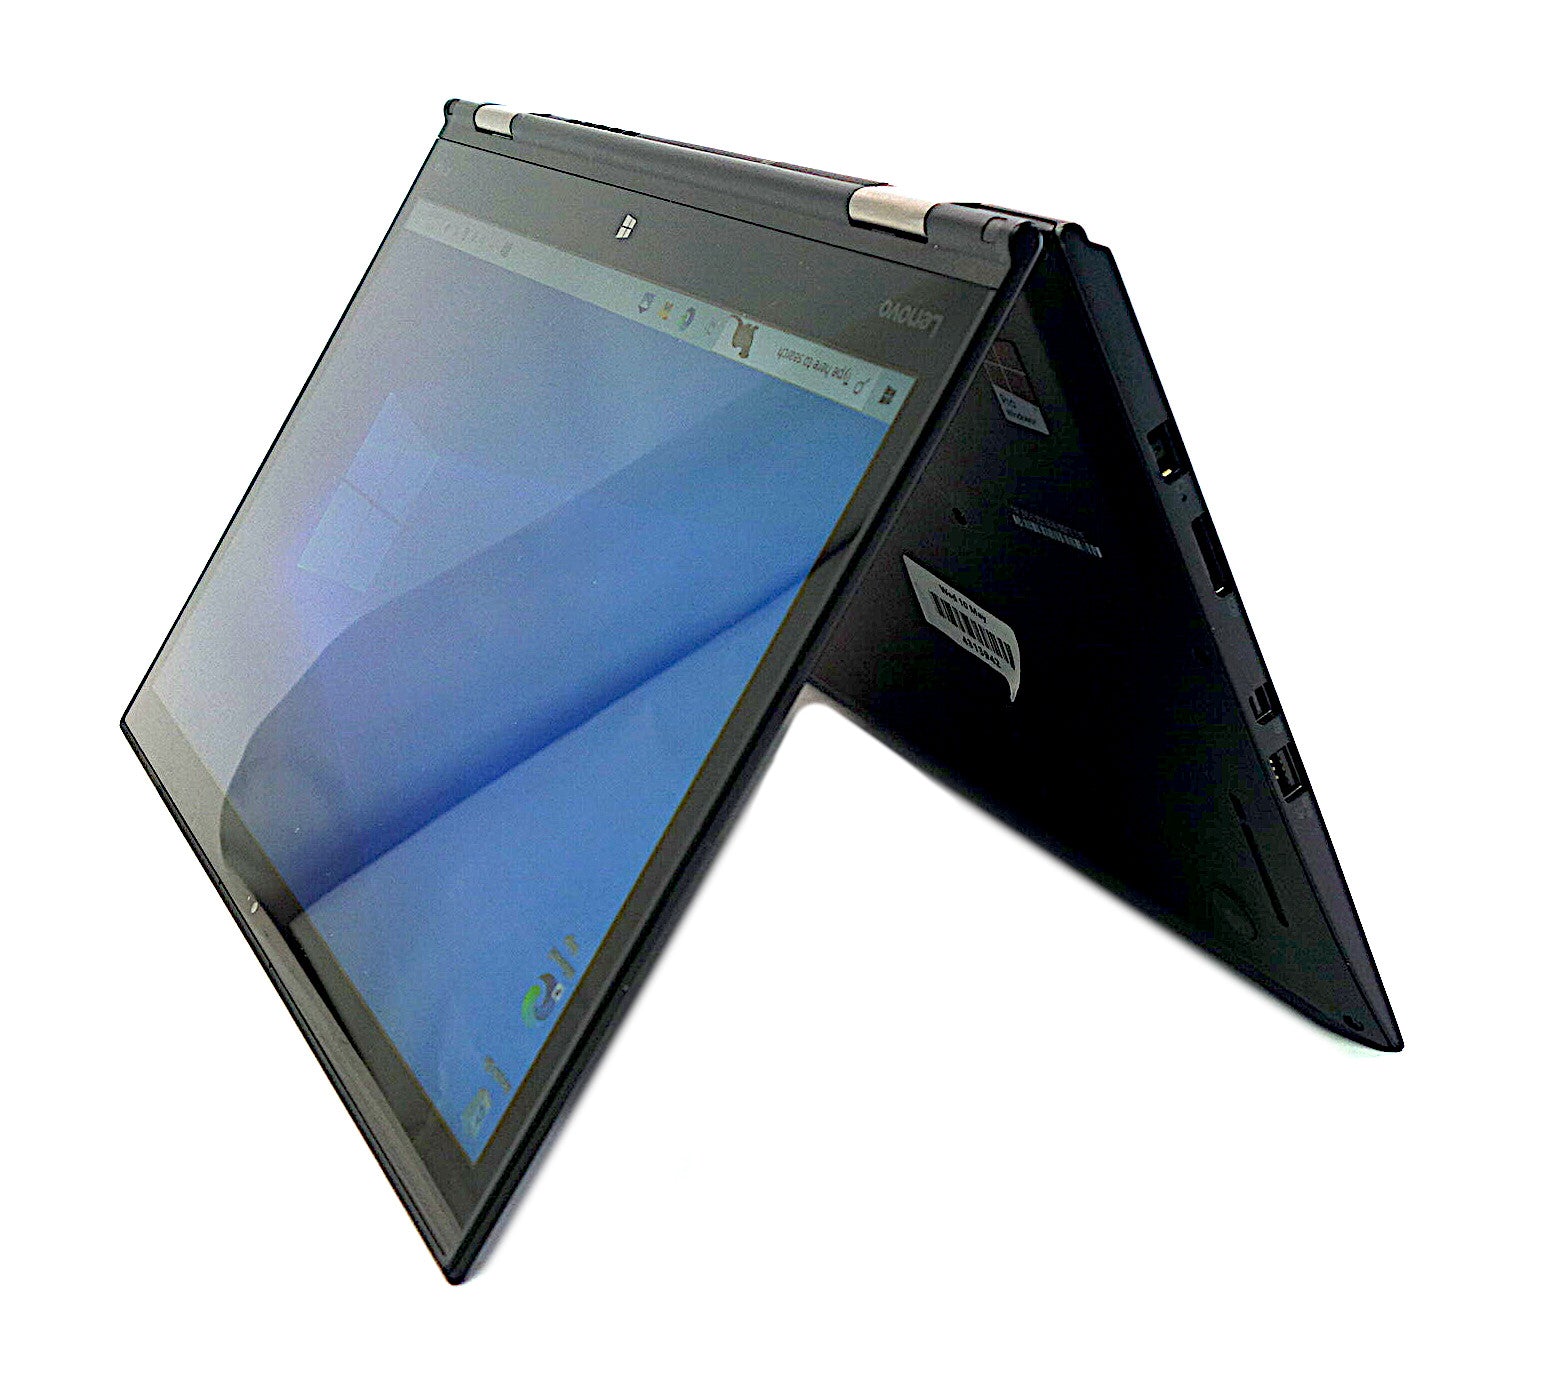 Lenovo ThinkPad X1 Yoga 1st Laptop, 14" i7 6th Gen, 8GB RAM, 256GB SSD